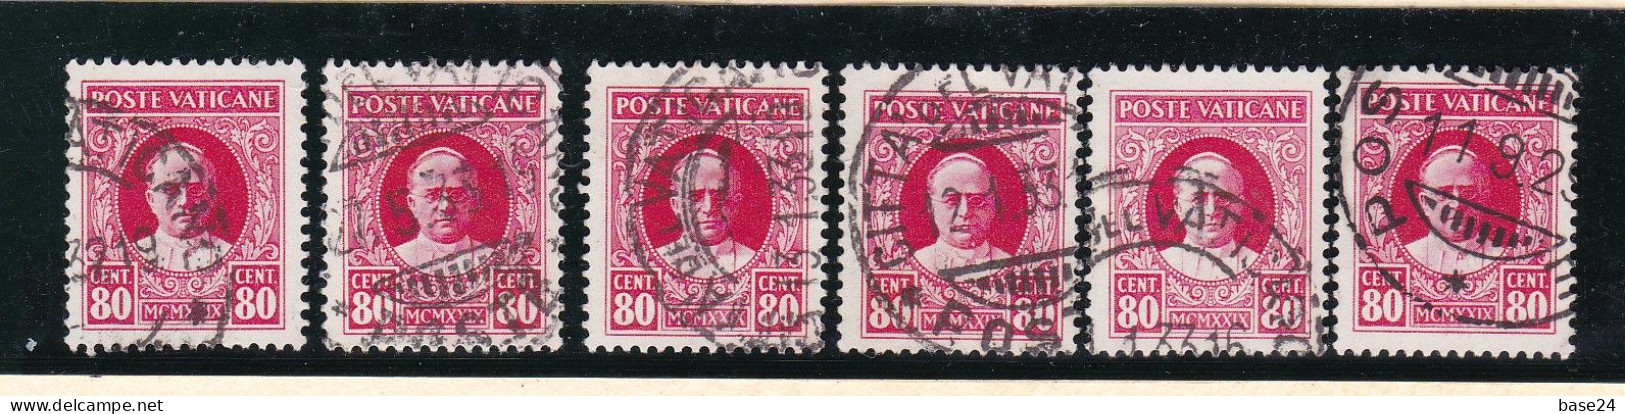 1929 Vaticano Vatican SEGNATASSE  POSTAGE DUE 80 Cent (x 6) Usati USED - Taxes